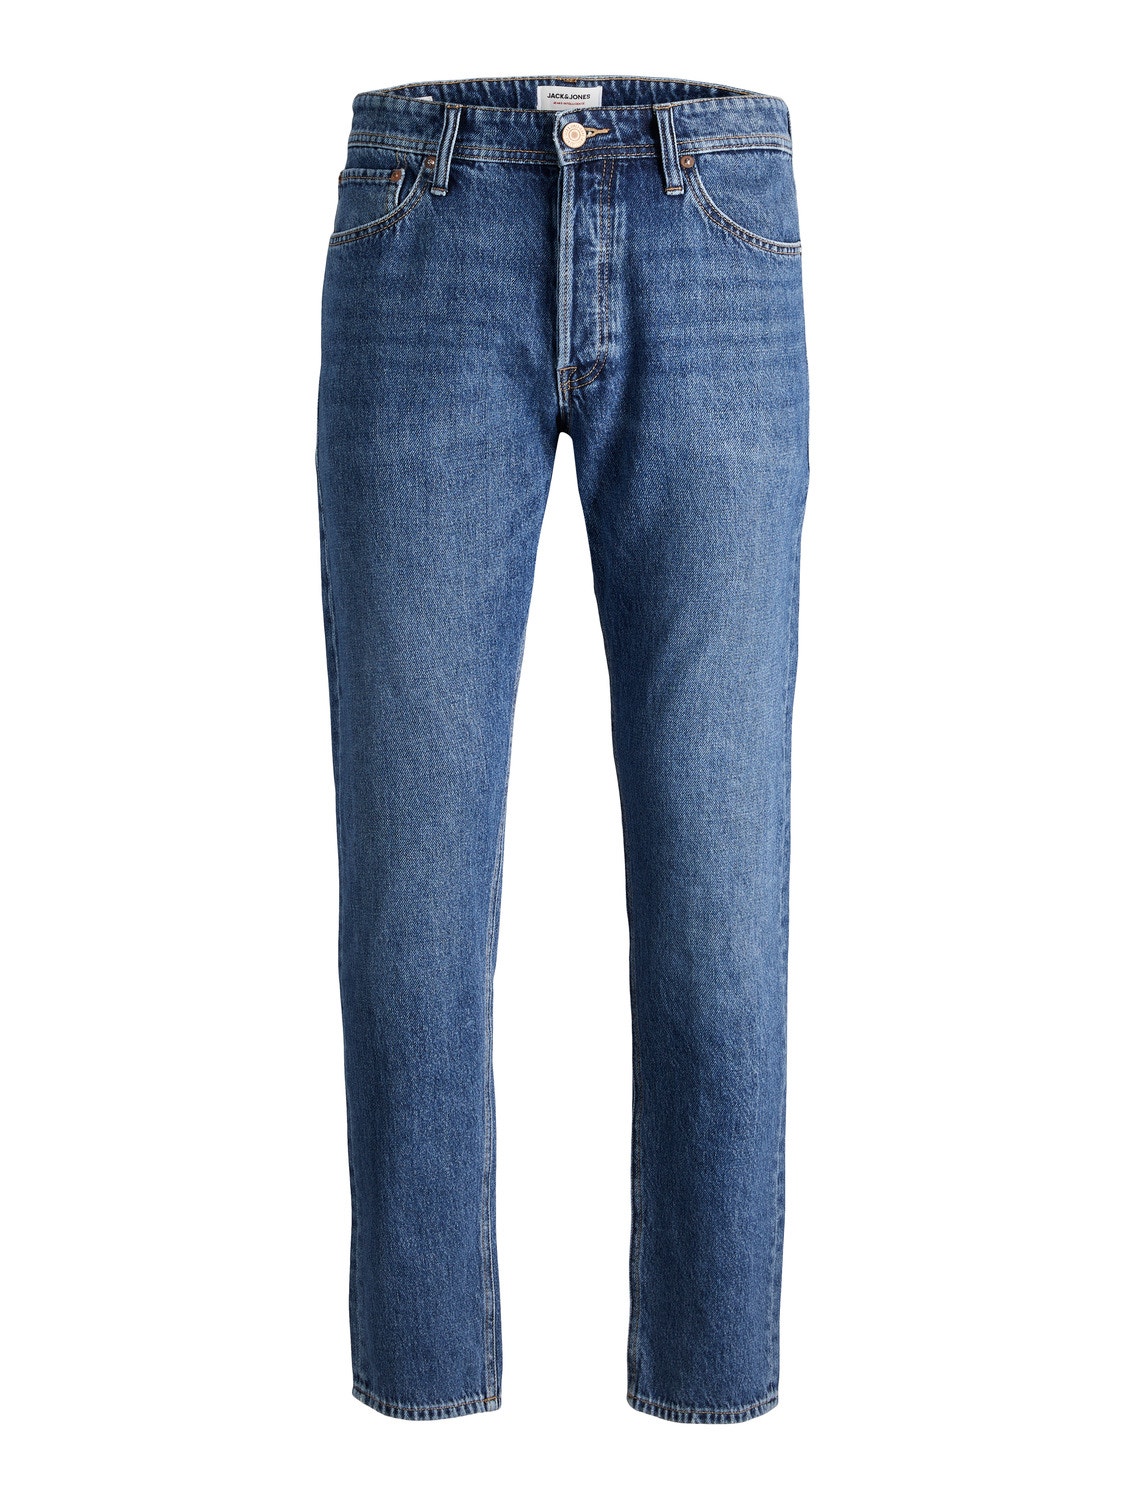 MF JJIMIKE | NOOS Jones® Medium | 123 & jeans Tapered Jack JJORIGINAL Blue fit